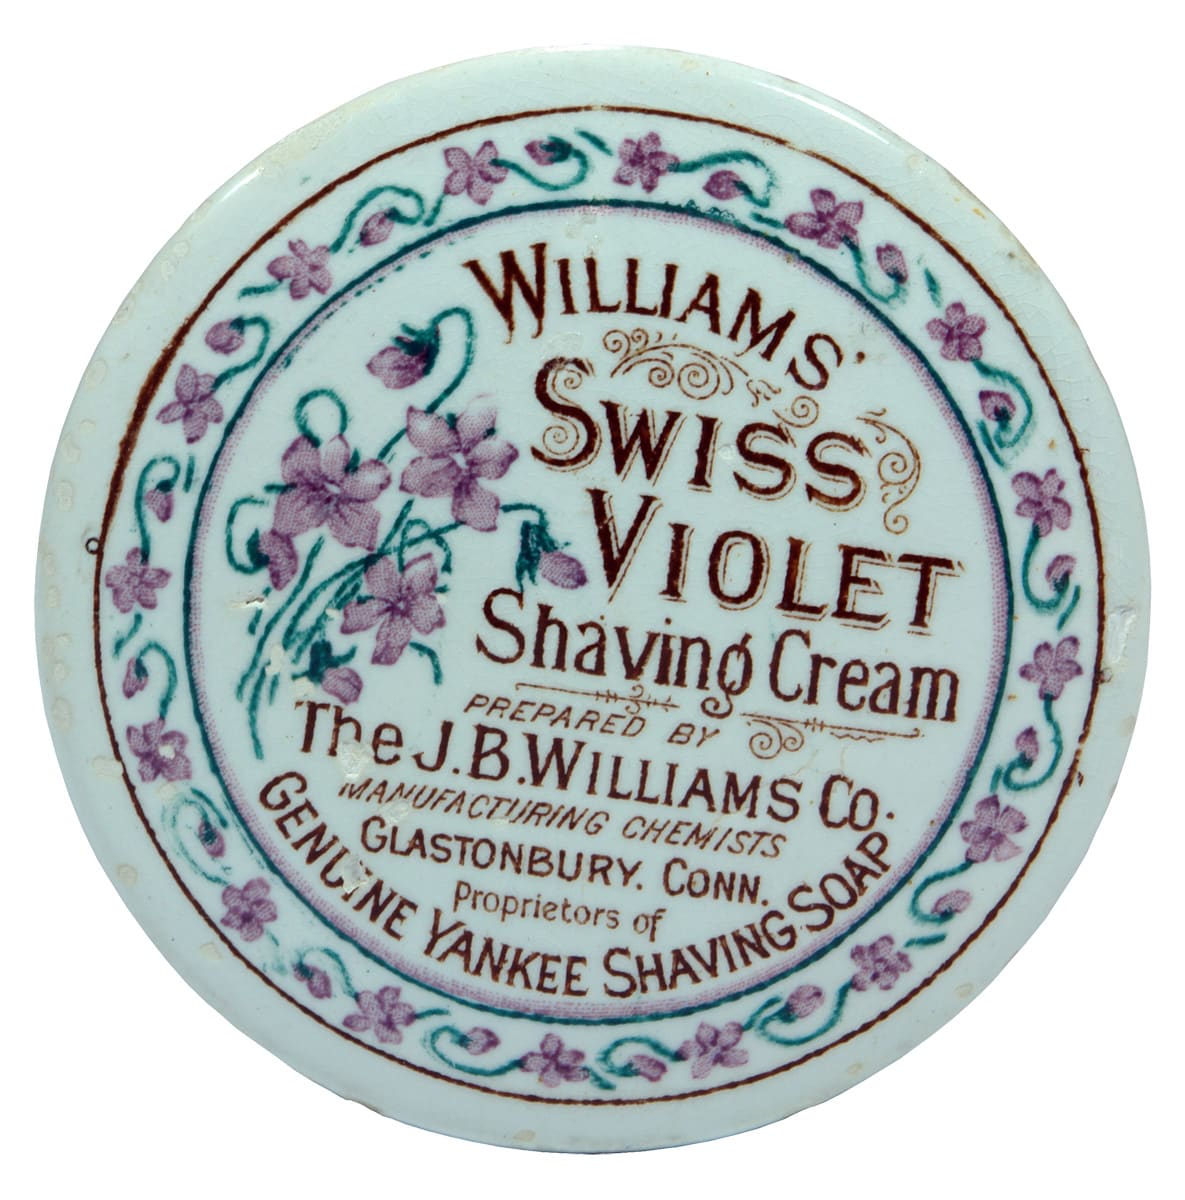 Williams Swiss Violet Shaving Cream Pot Lid